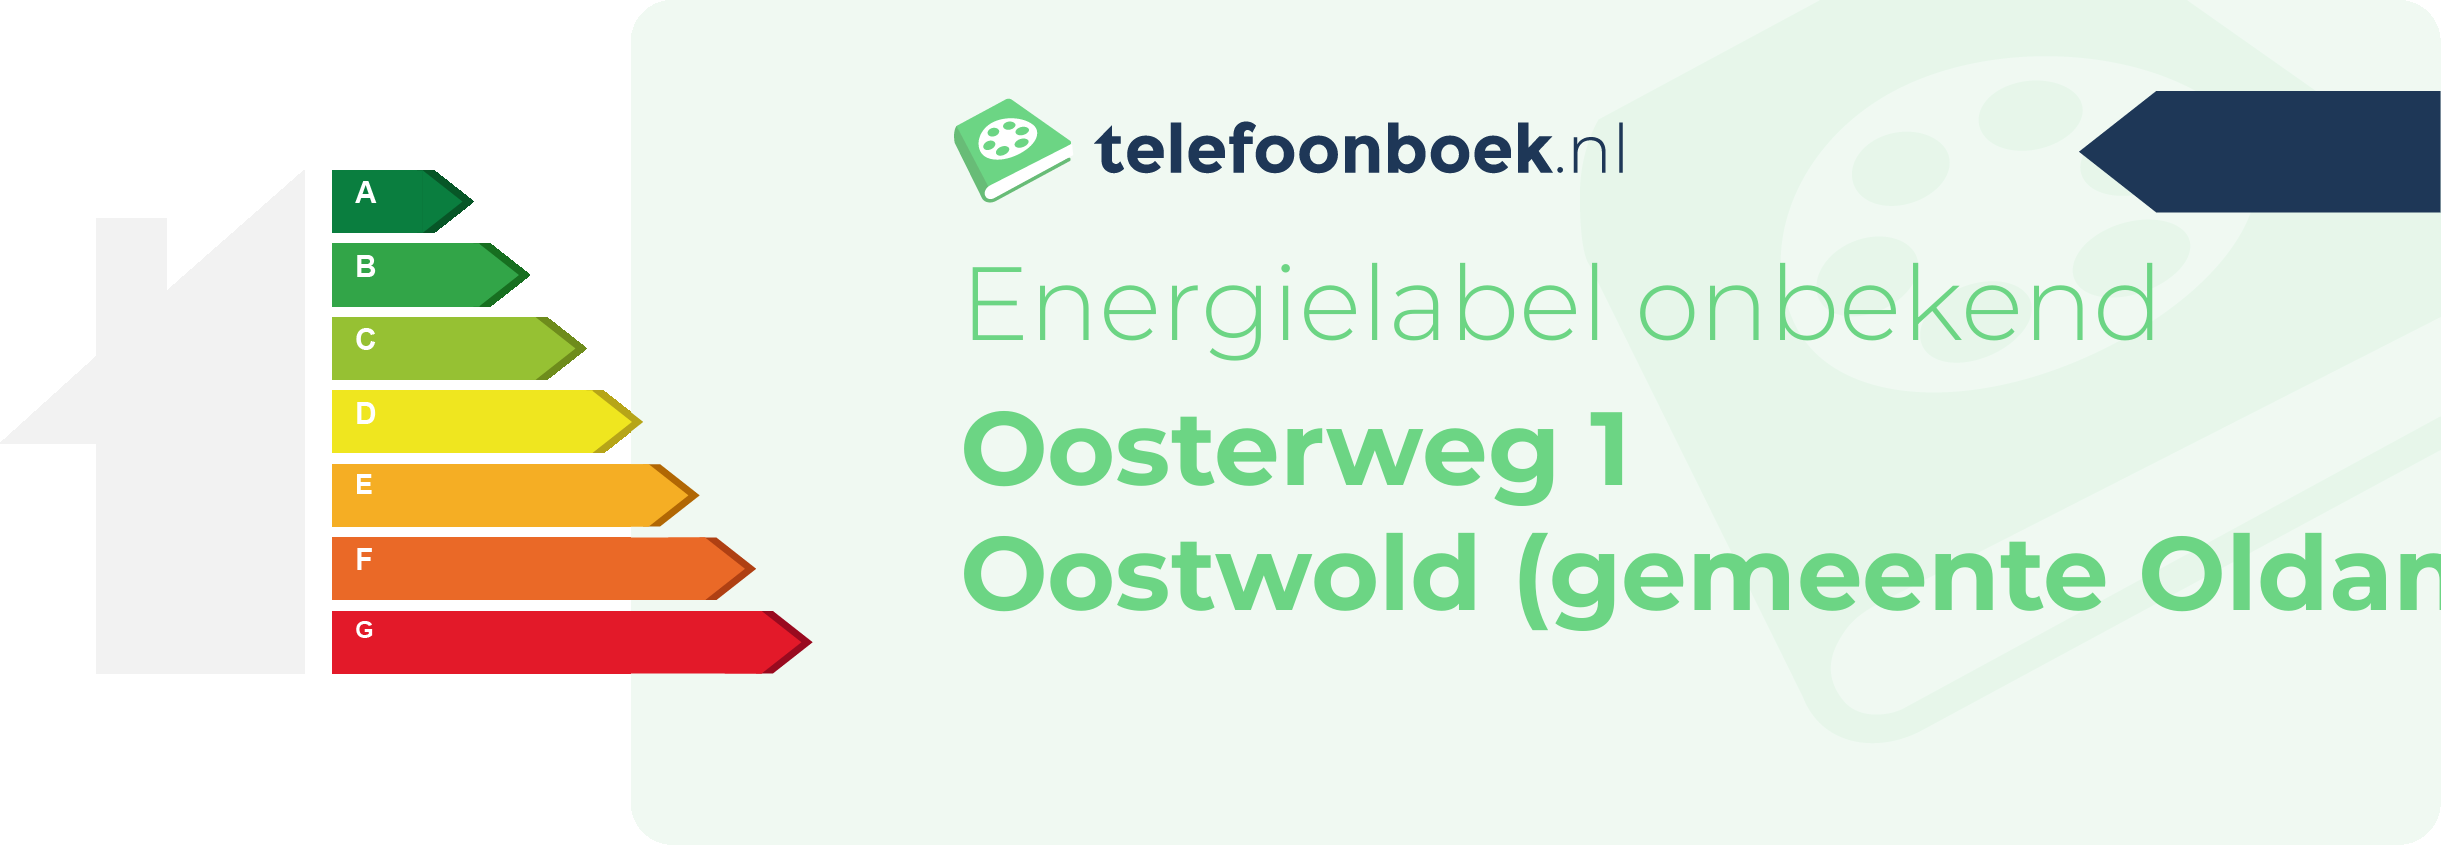 Energielabel Oosterweg 1 Oostwold (gemeente Oldambt Groningen)